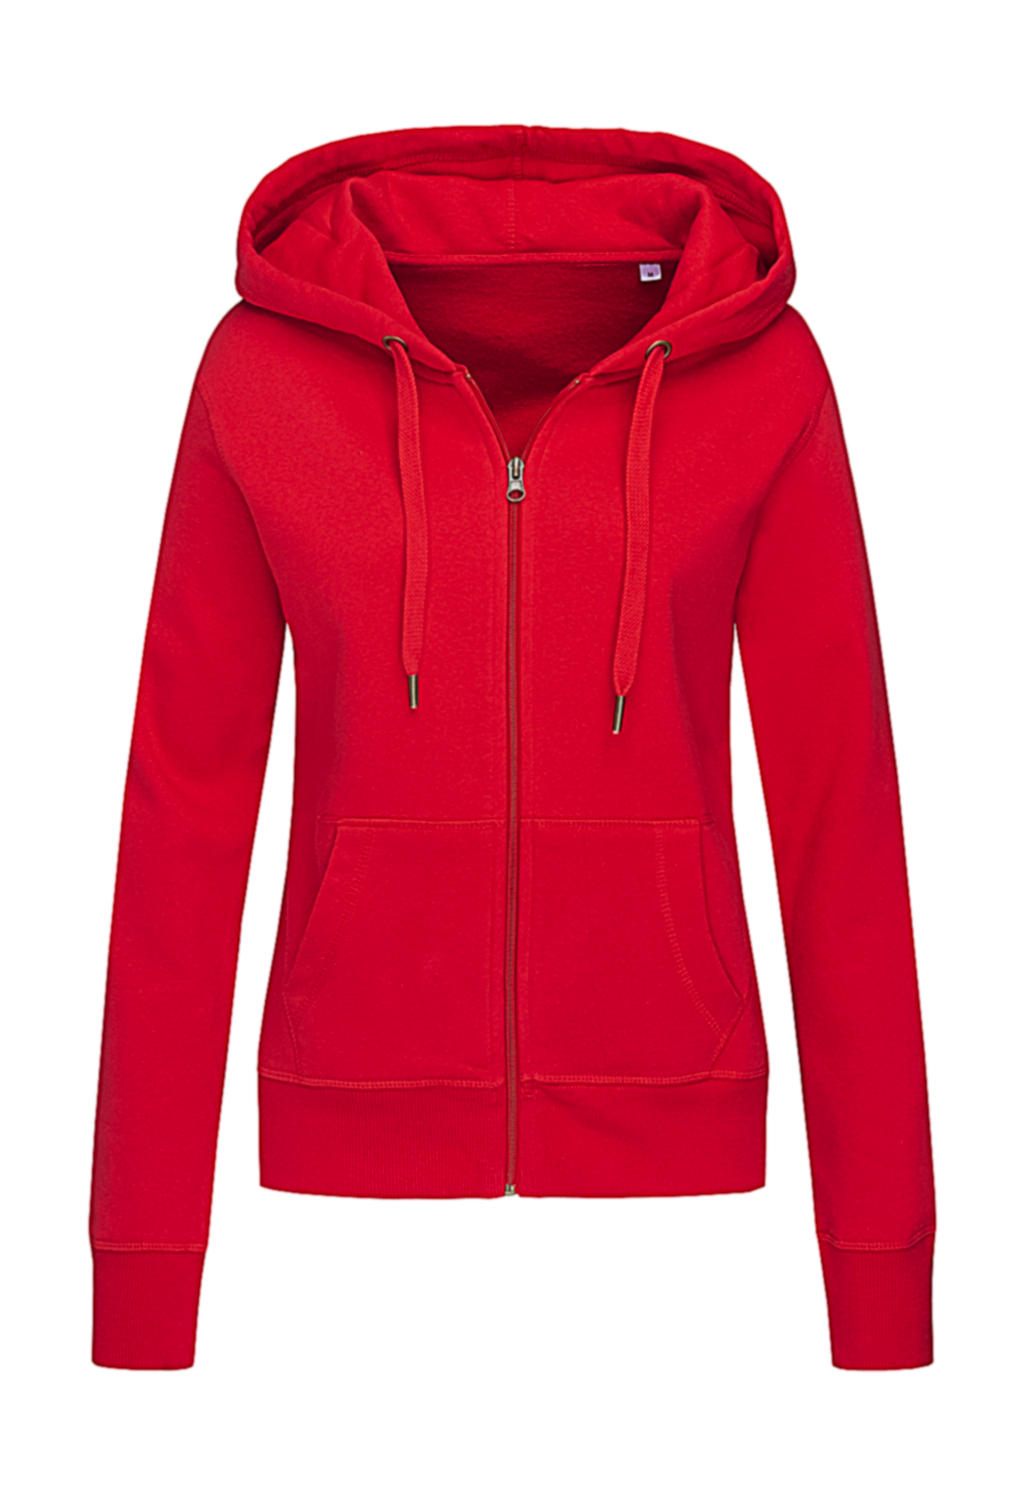 Sweat Jacket Select Women - crimson red